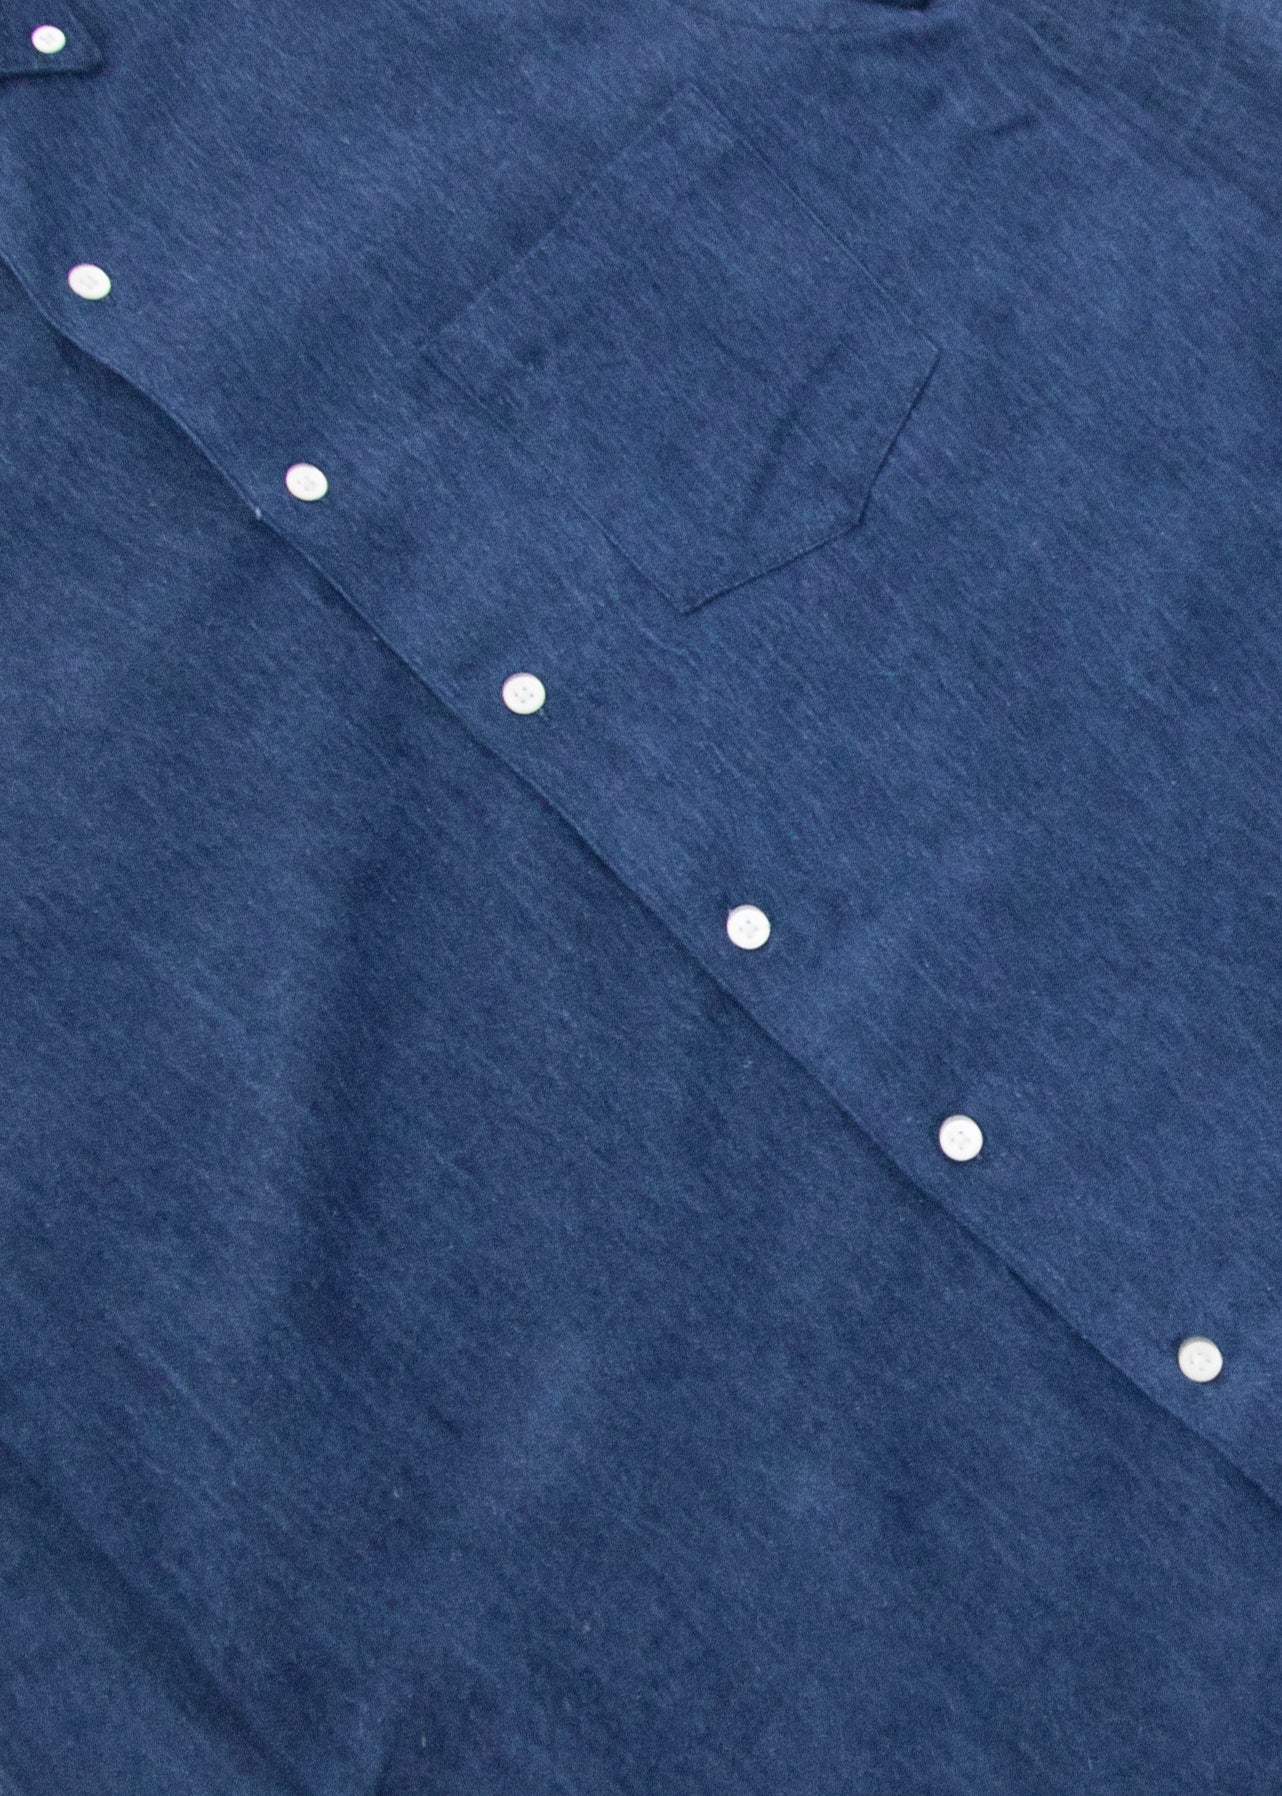 close up Flat lay front single needle shirt dark blue denim